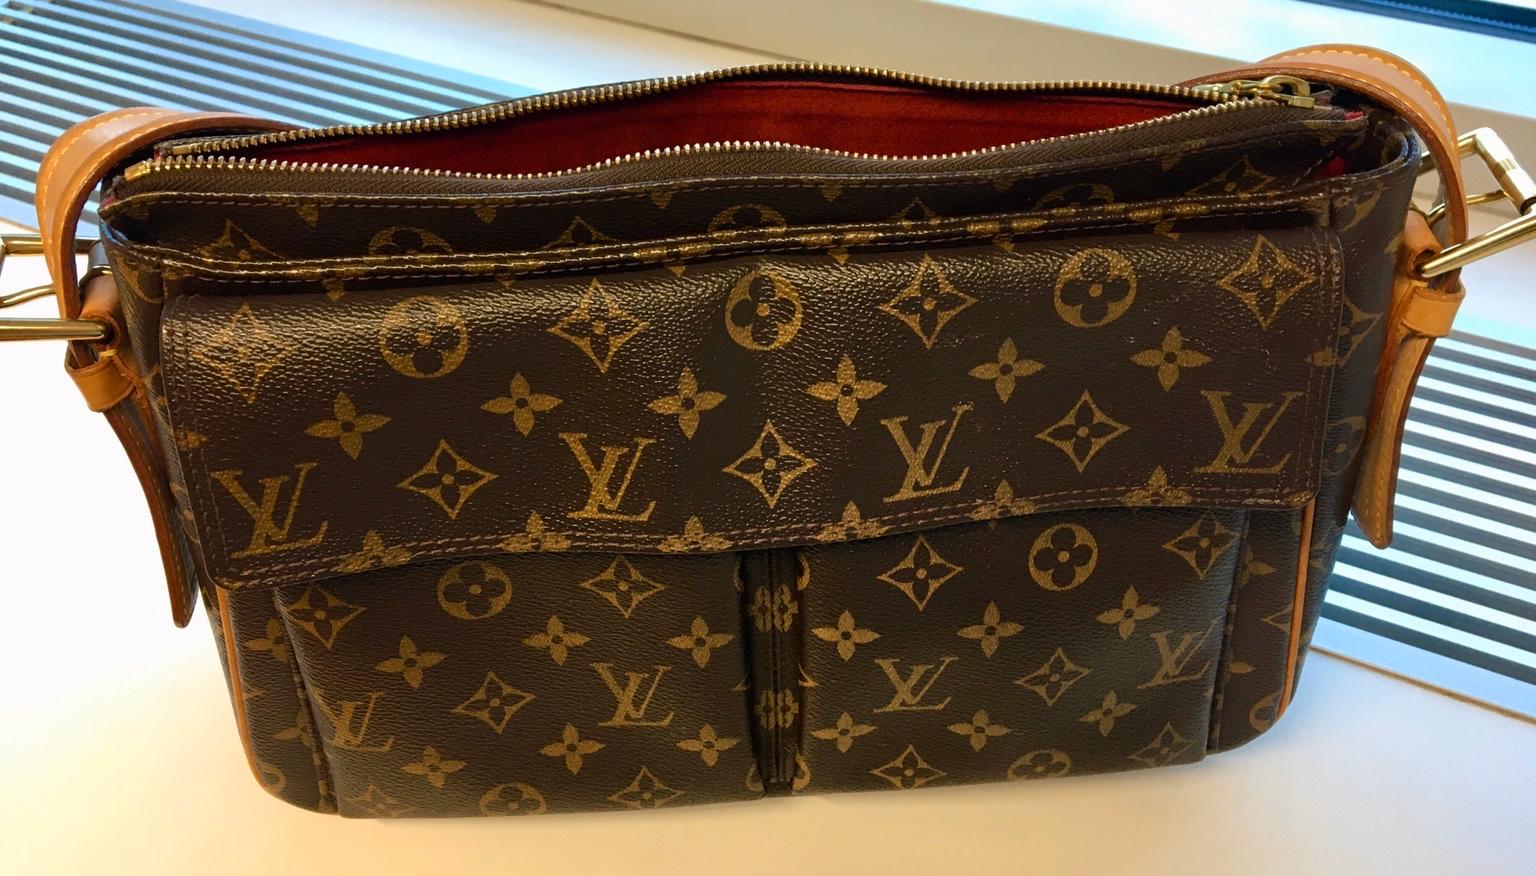 Louis Vuitton Handtasche In 3100 Gemeinde St Polten For 560 00 For Sale Shpock